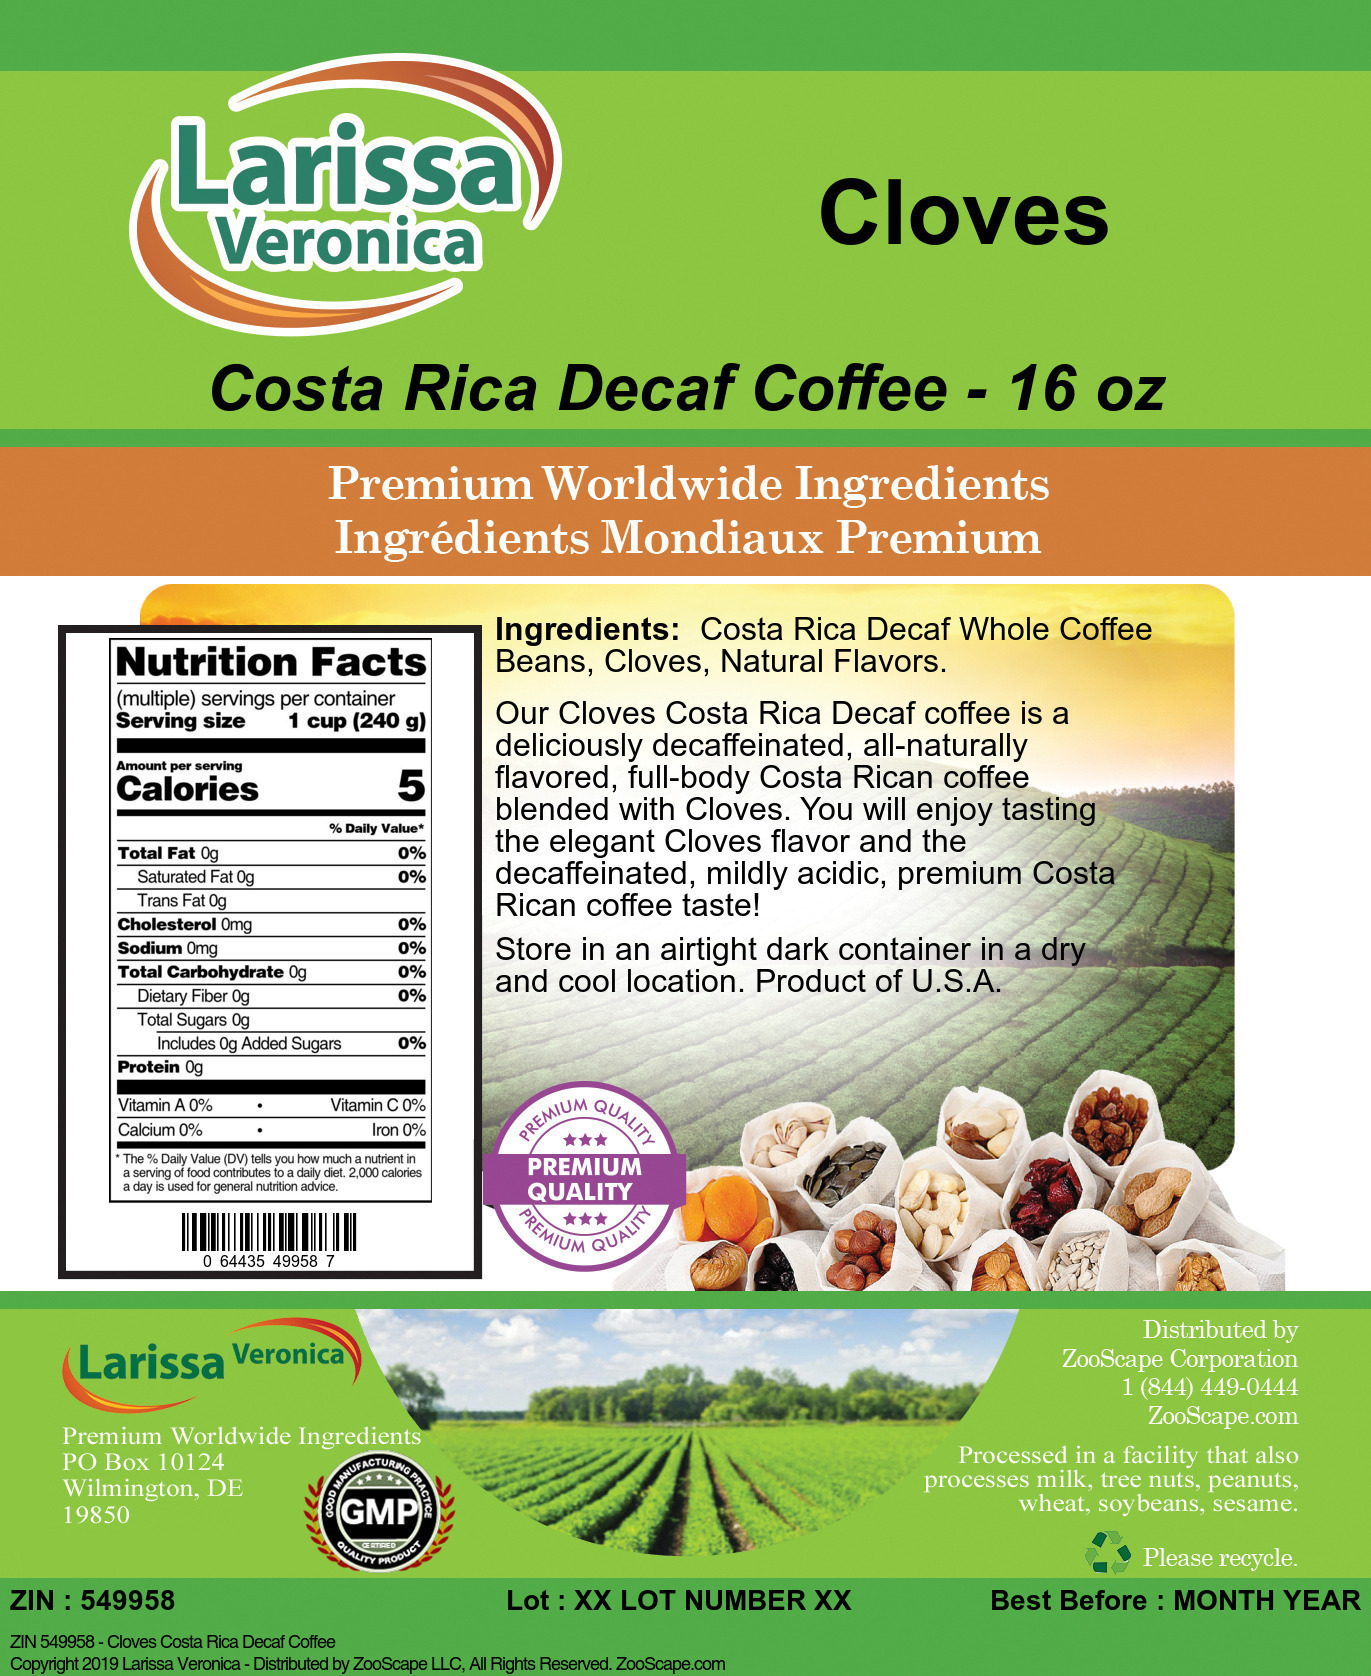 Cloves Costa Rica Decaf Coffee - Label